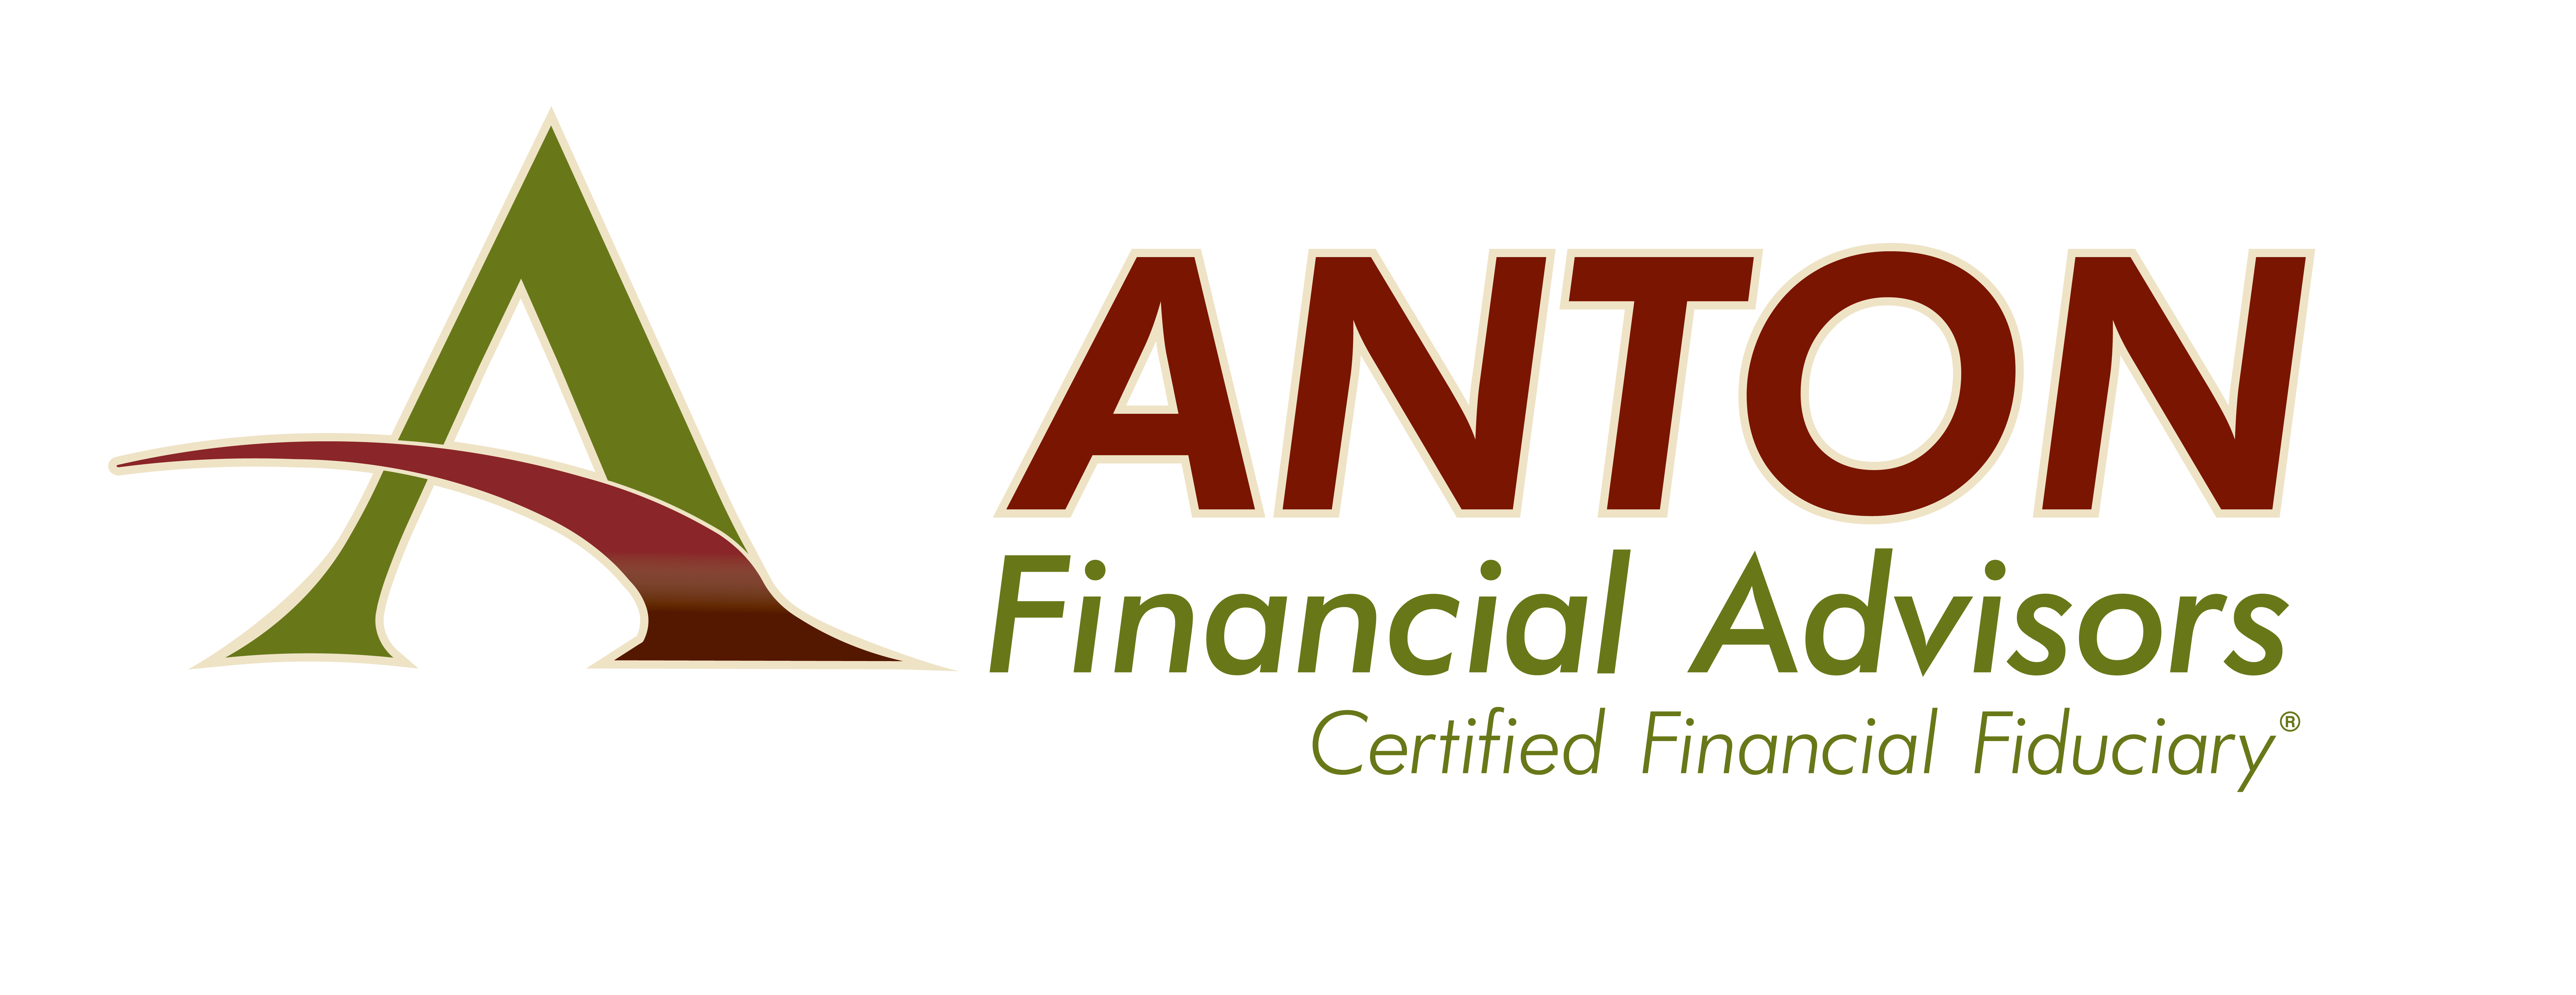 Anton Financial Advisors